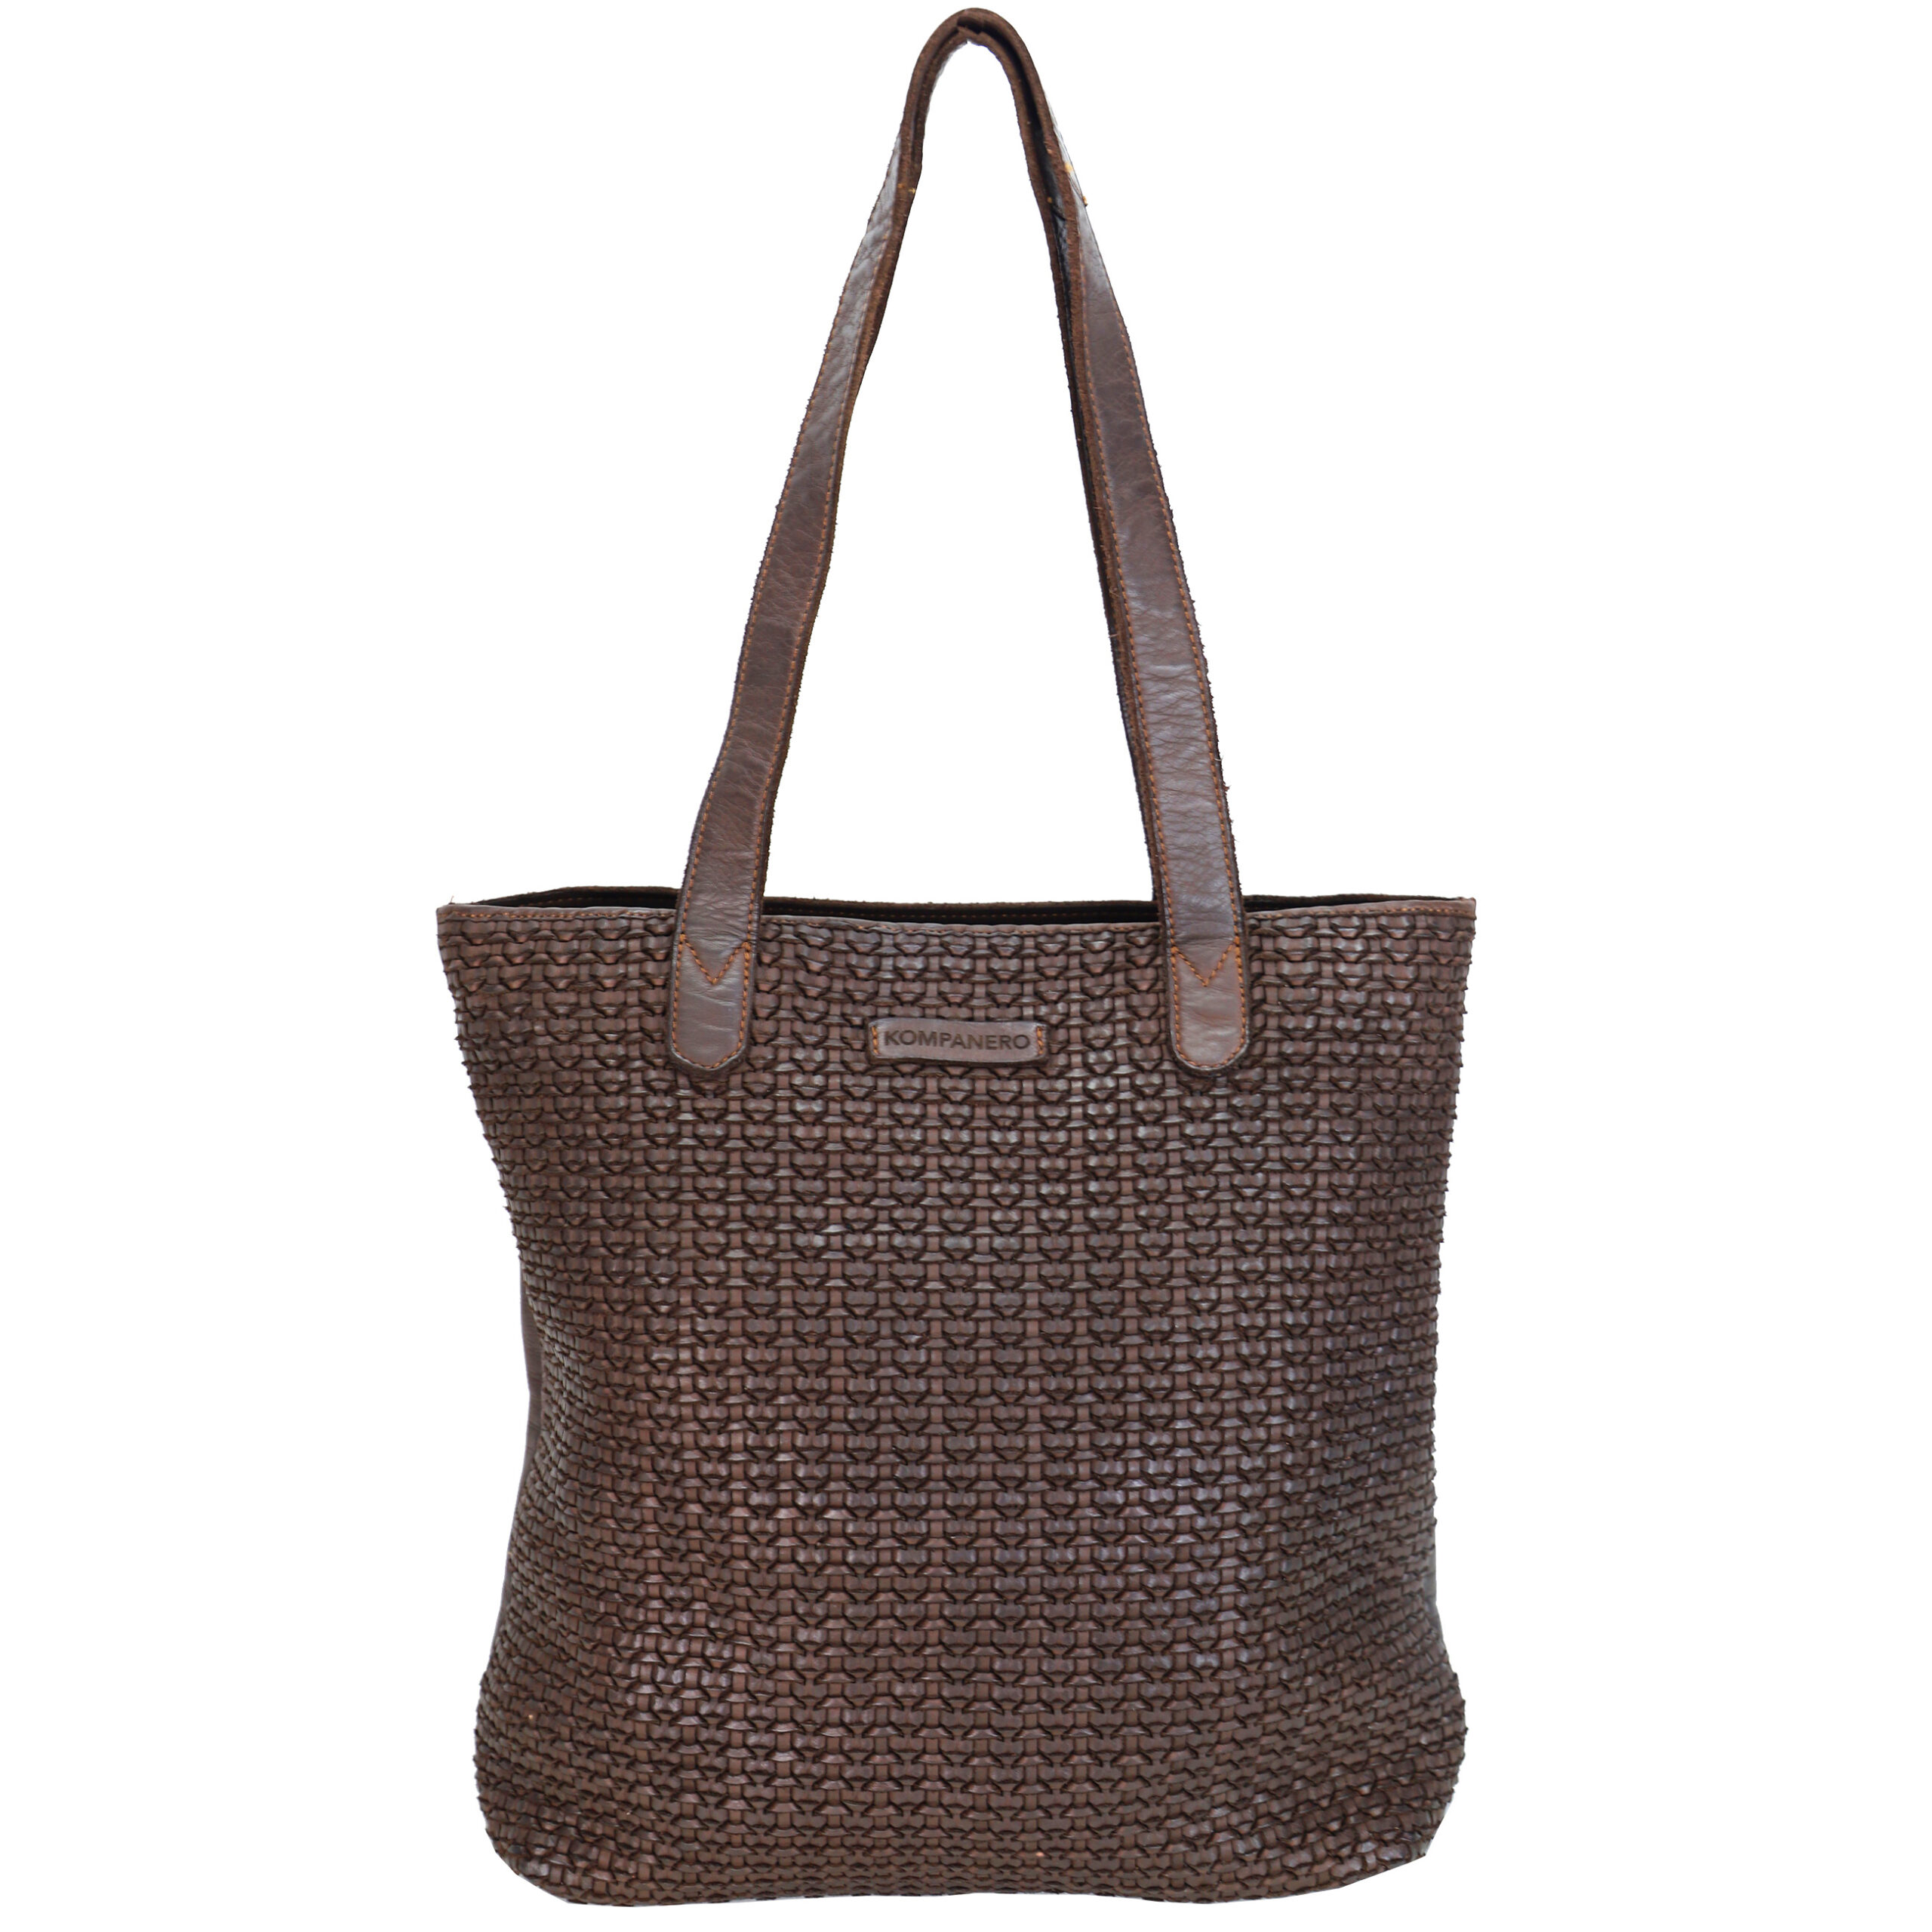 NWT Daphne Gray shoulder bag | eBay